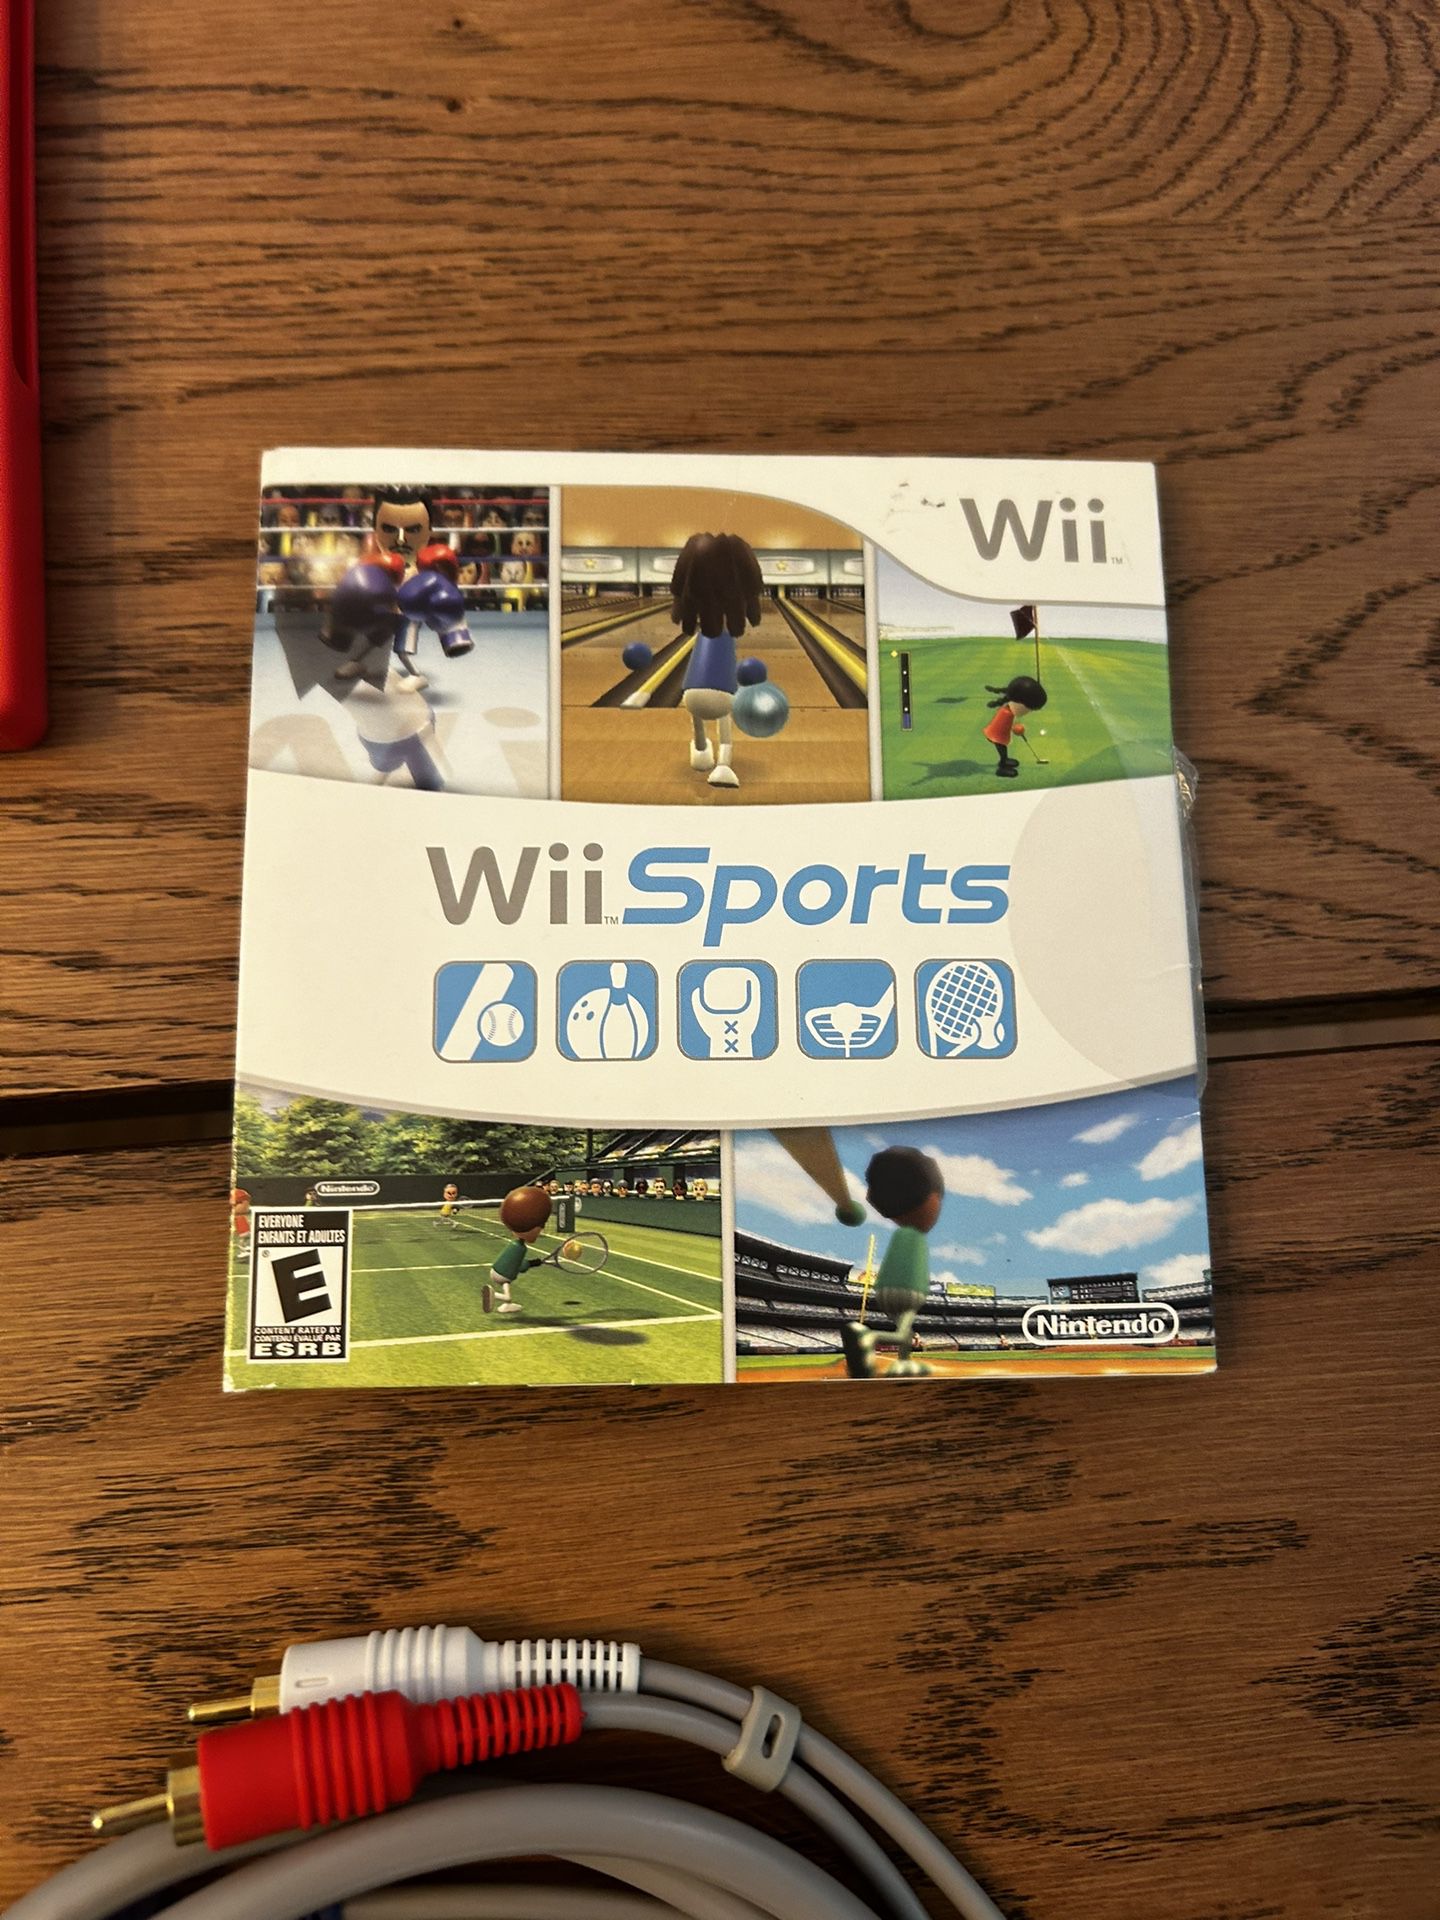 Nintendo Wii Sports Game